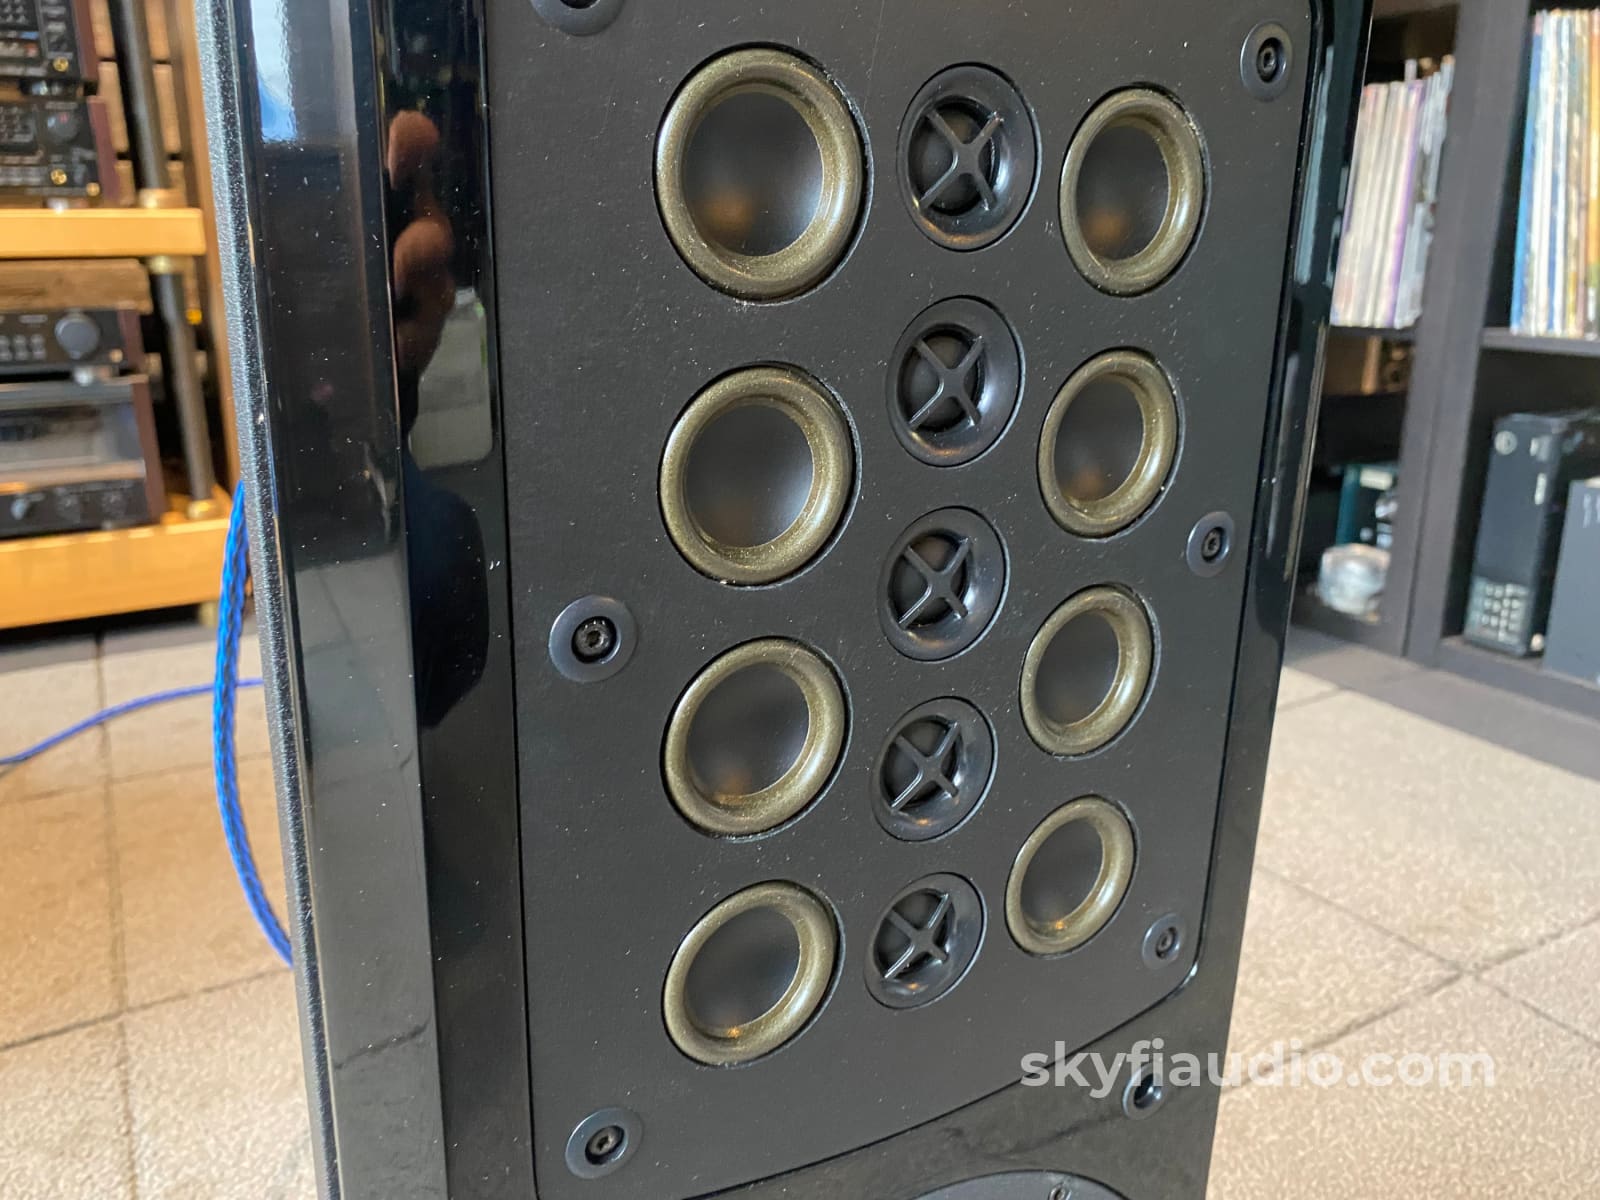 Mcintosh Xcs200 Speaker Set - Big Sound With 600 Watt Power-Handling Speakers